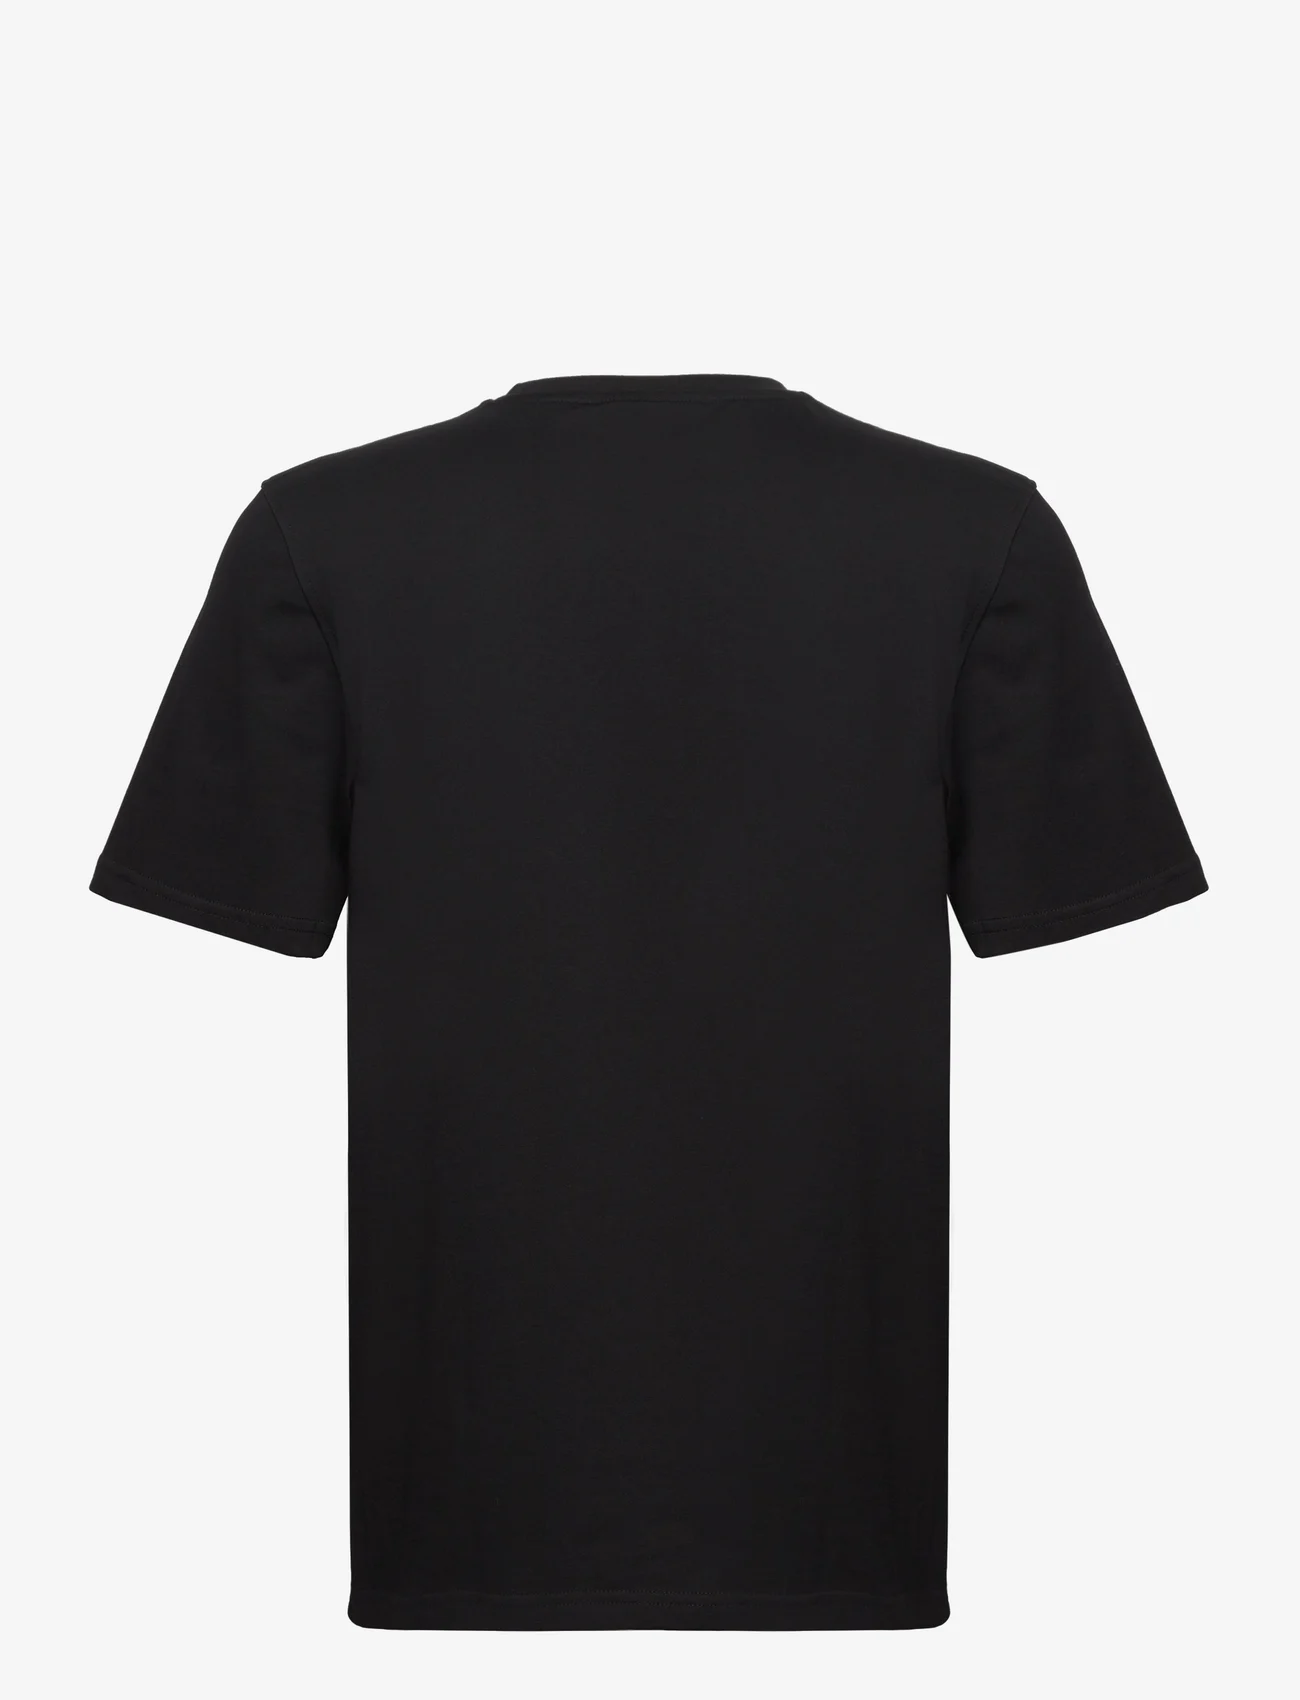 HAN Kjøbenhavn - Graphic Font Regular Tee S/S - basic t-shirts - black - 1